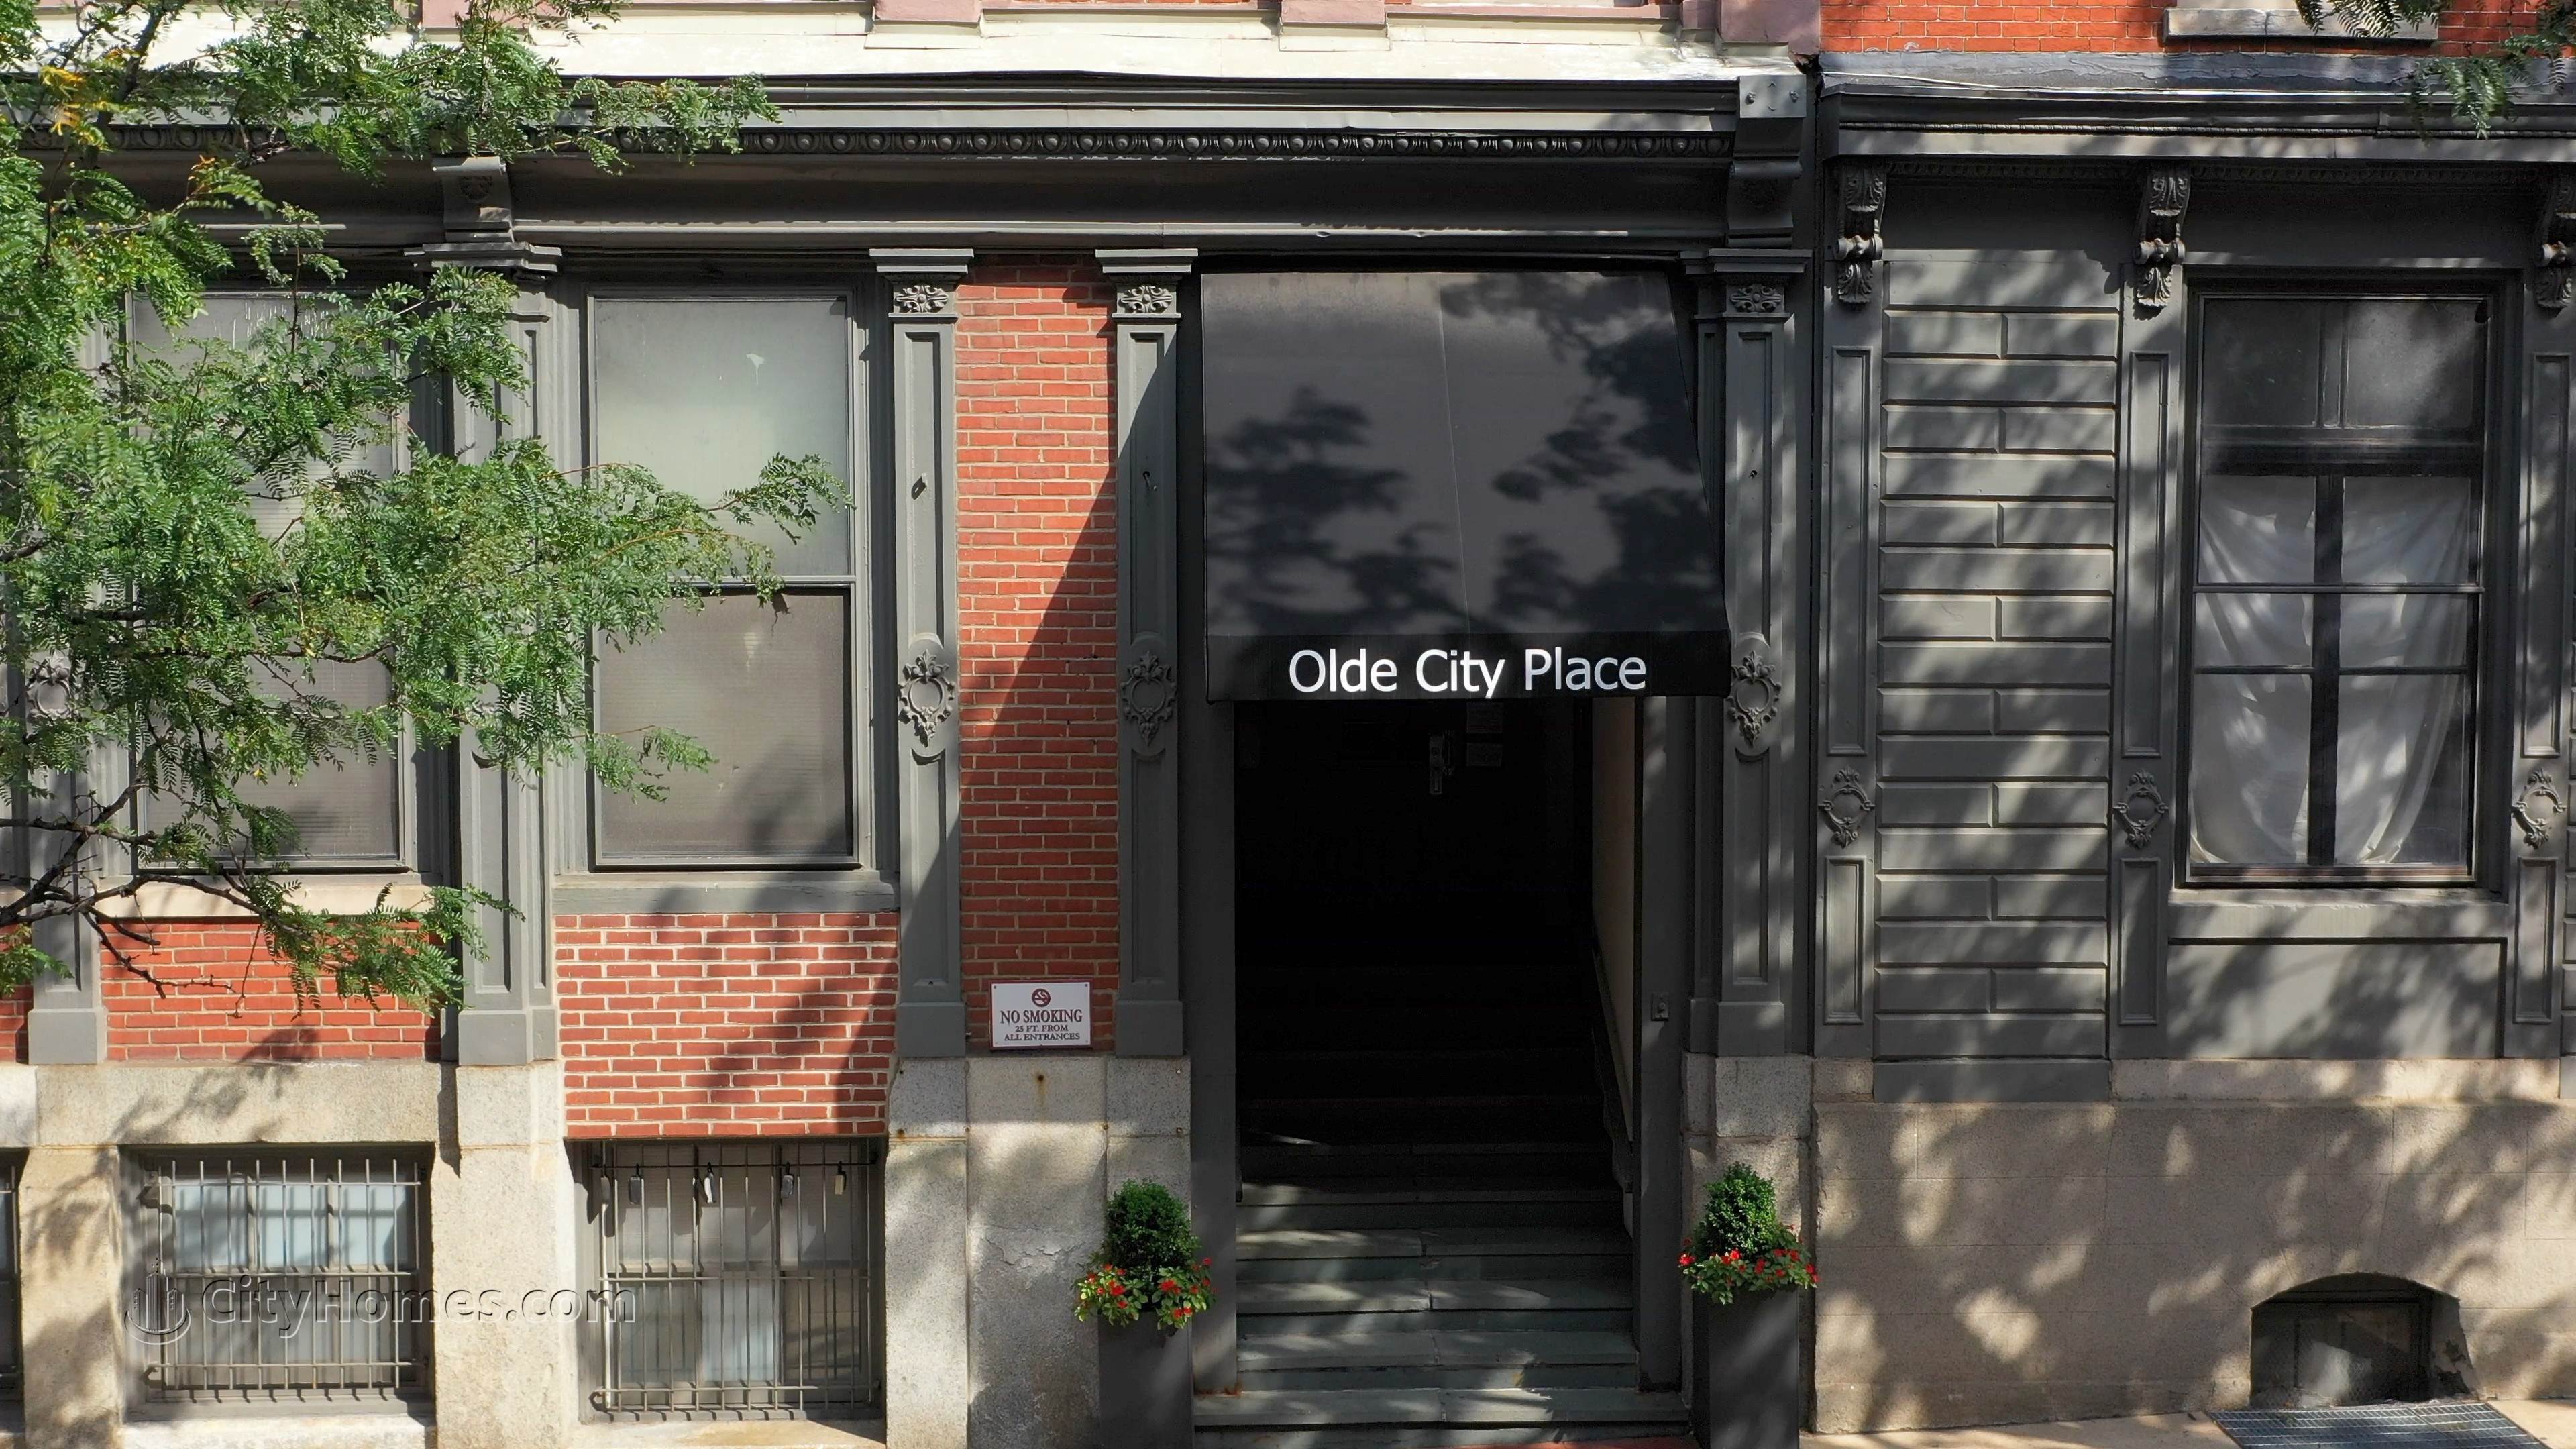 Olde City Place byggnad vid 205-11 N 4th St, Old City, Philadelphia, PA 19106